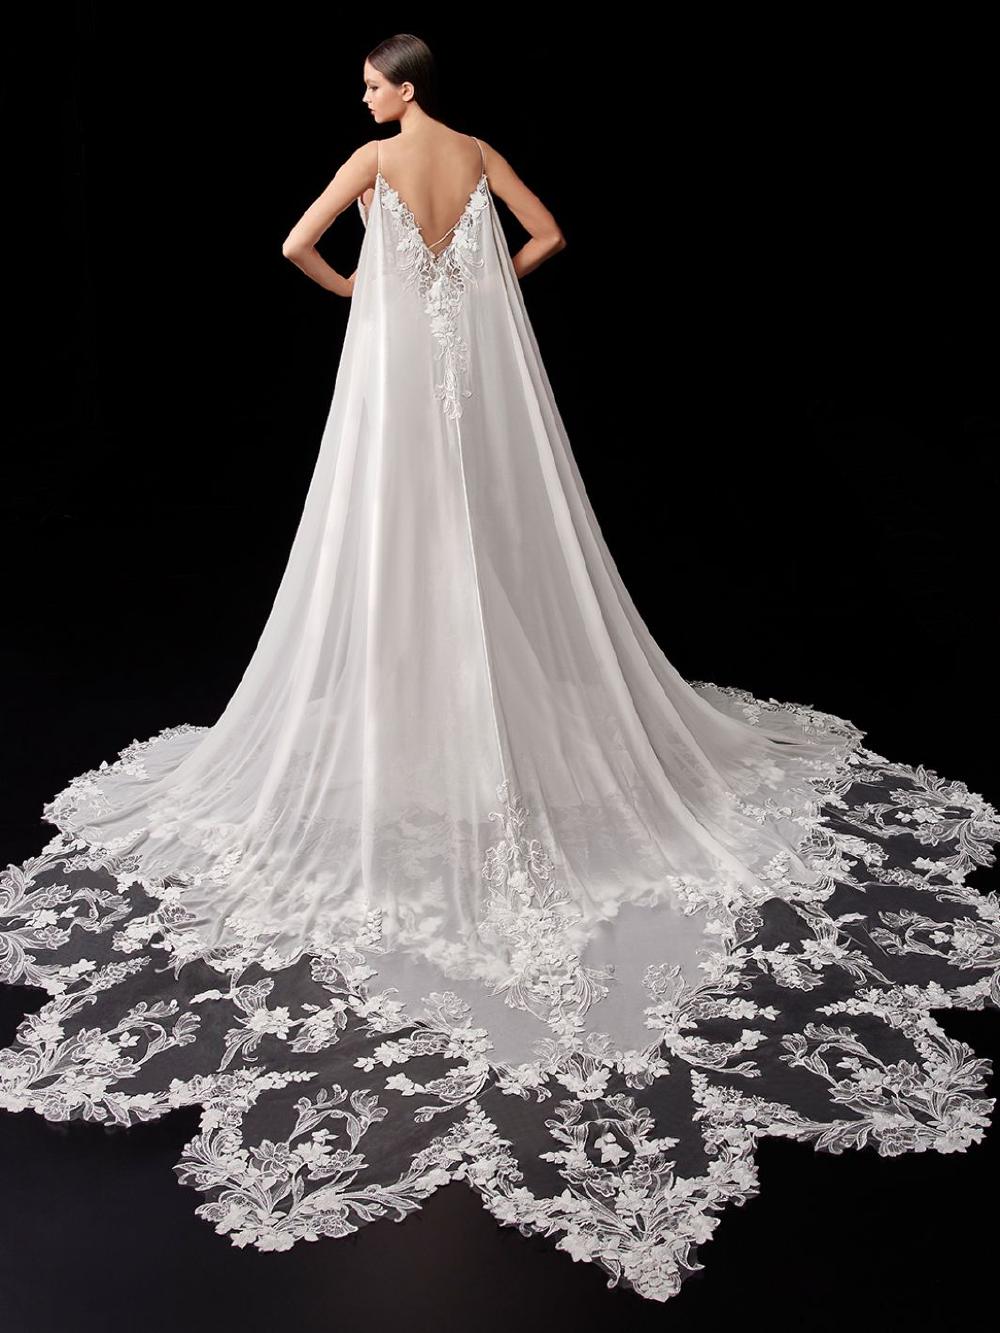 Wedding Gown by Madi Lane